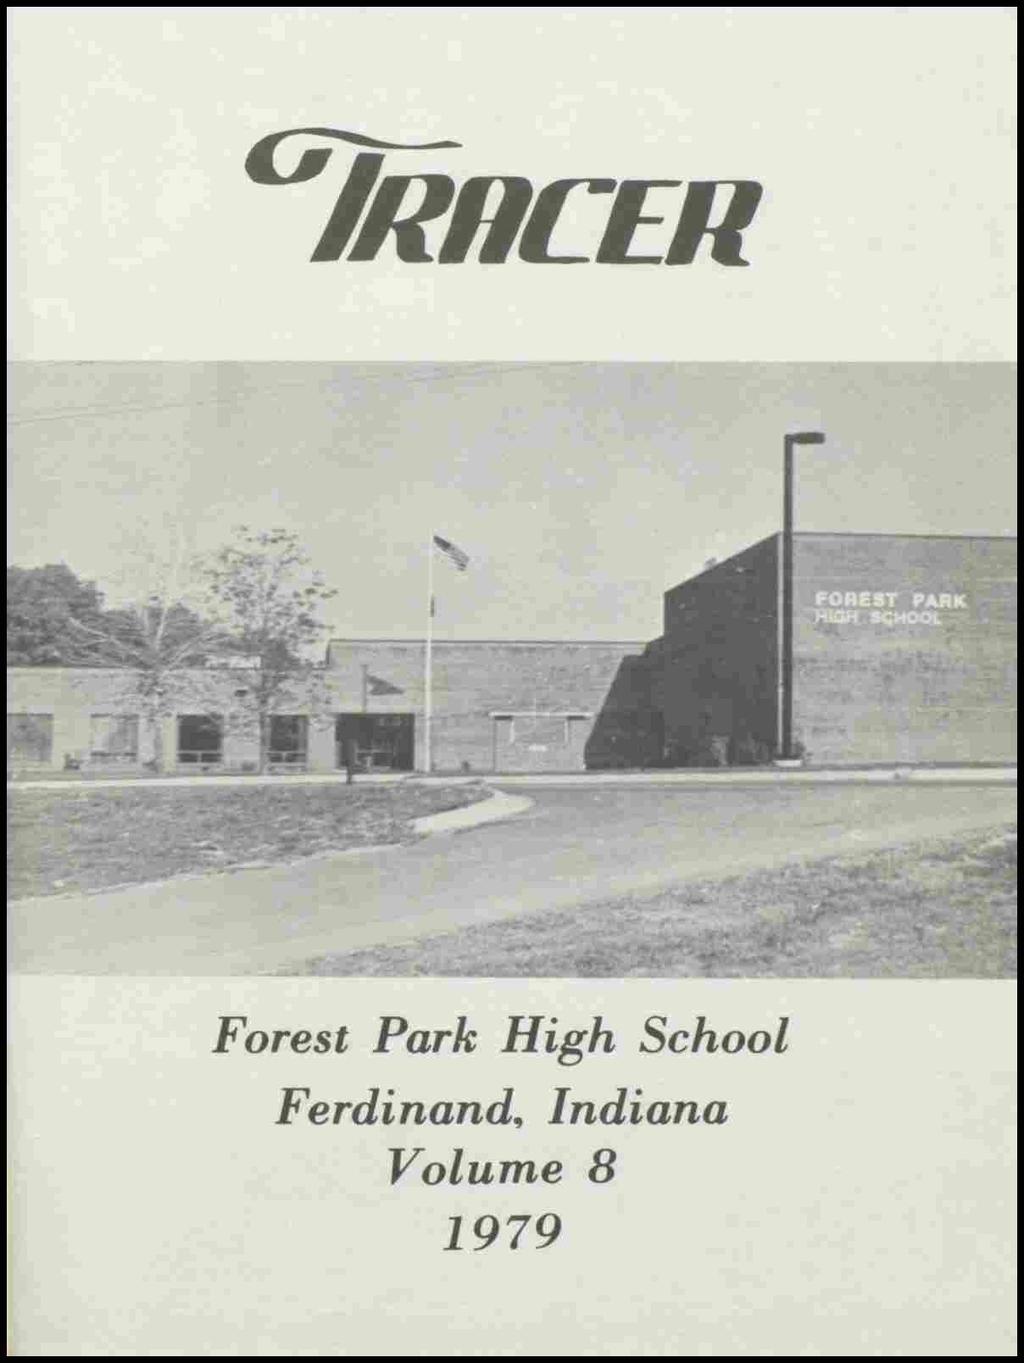 Forest Park High School